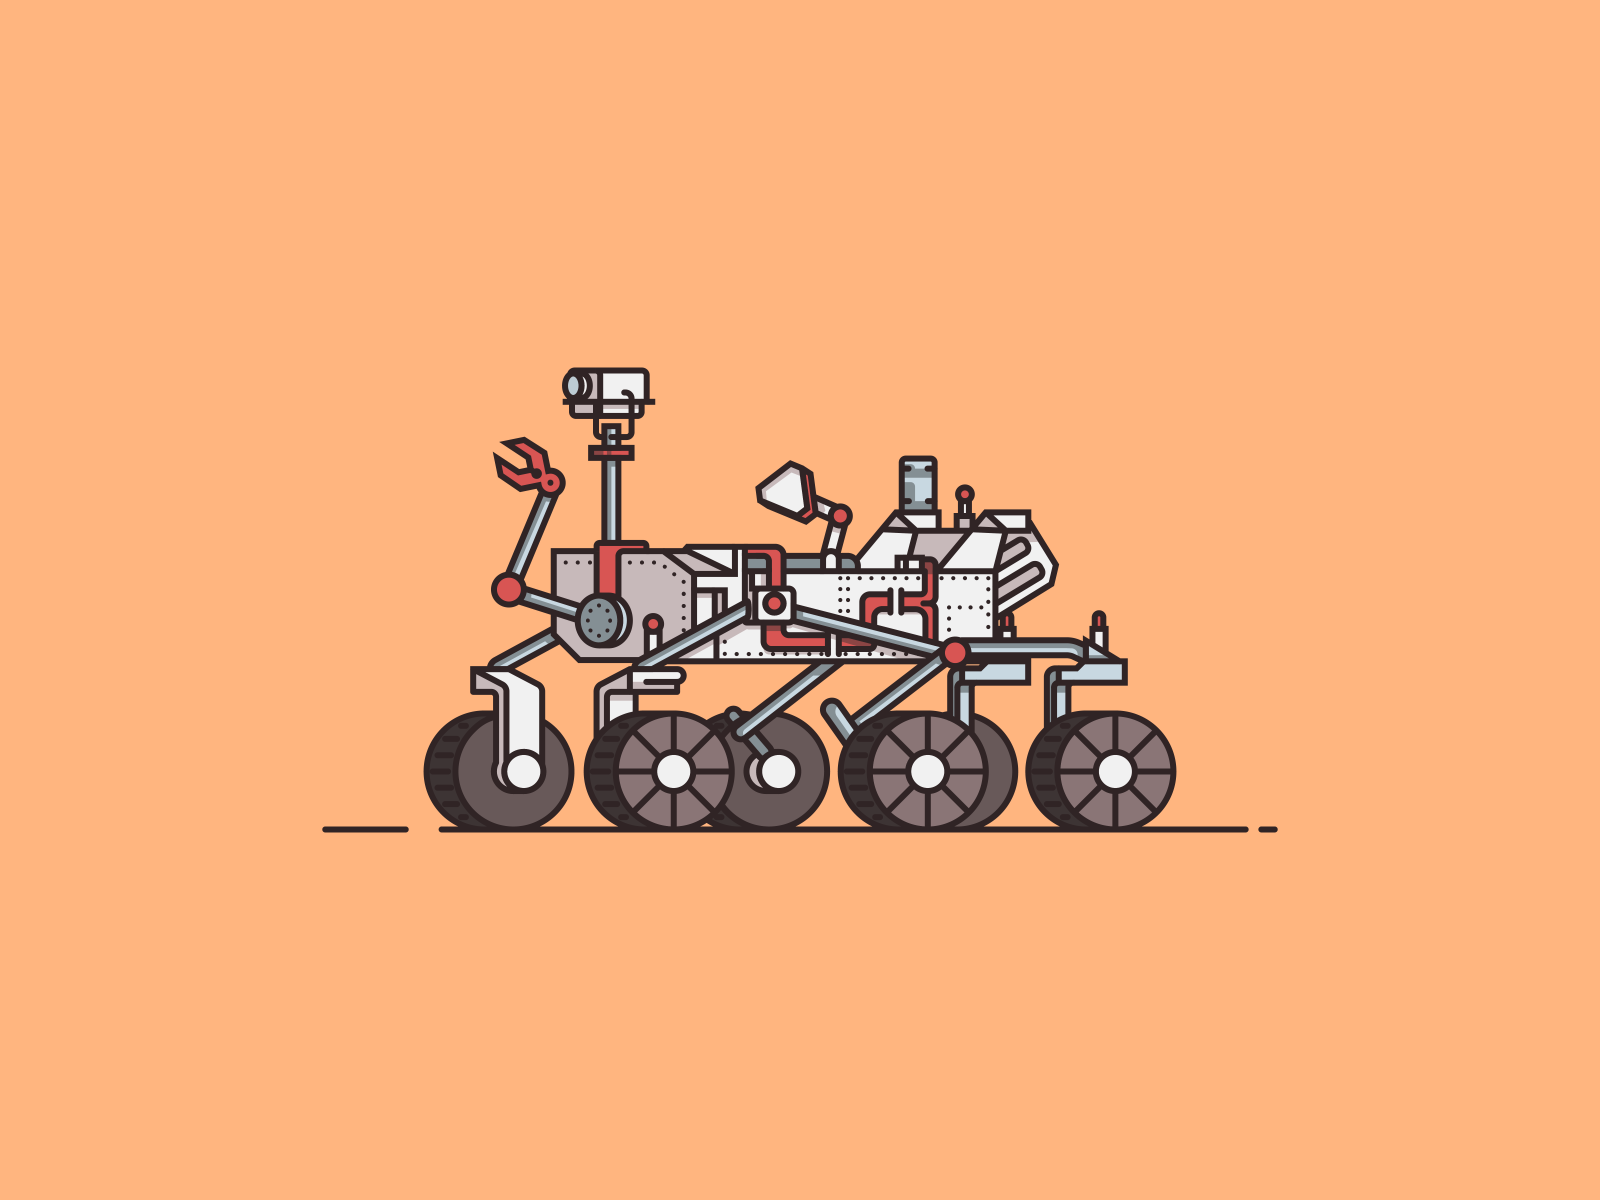 Mars Rover Illustration by Shibaa on Dribbble